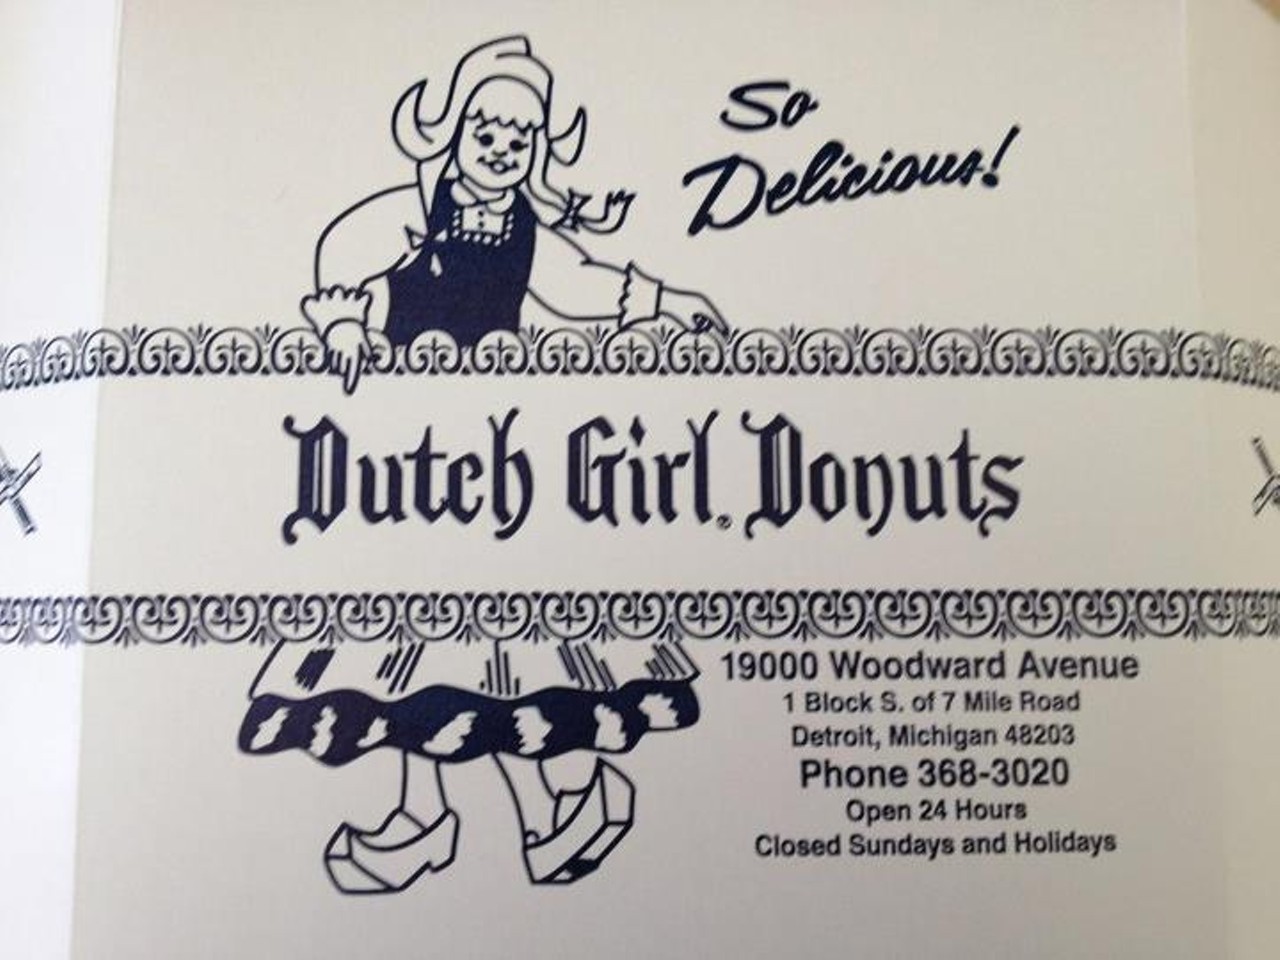 Dutch Girl Doughnuts
Located: 19000 Woodward, Detroit
Hours: Open 24 hours Mon-Fri Sat 1 am - 8 pm, closed Sun.